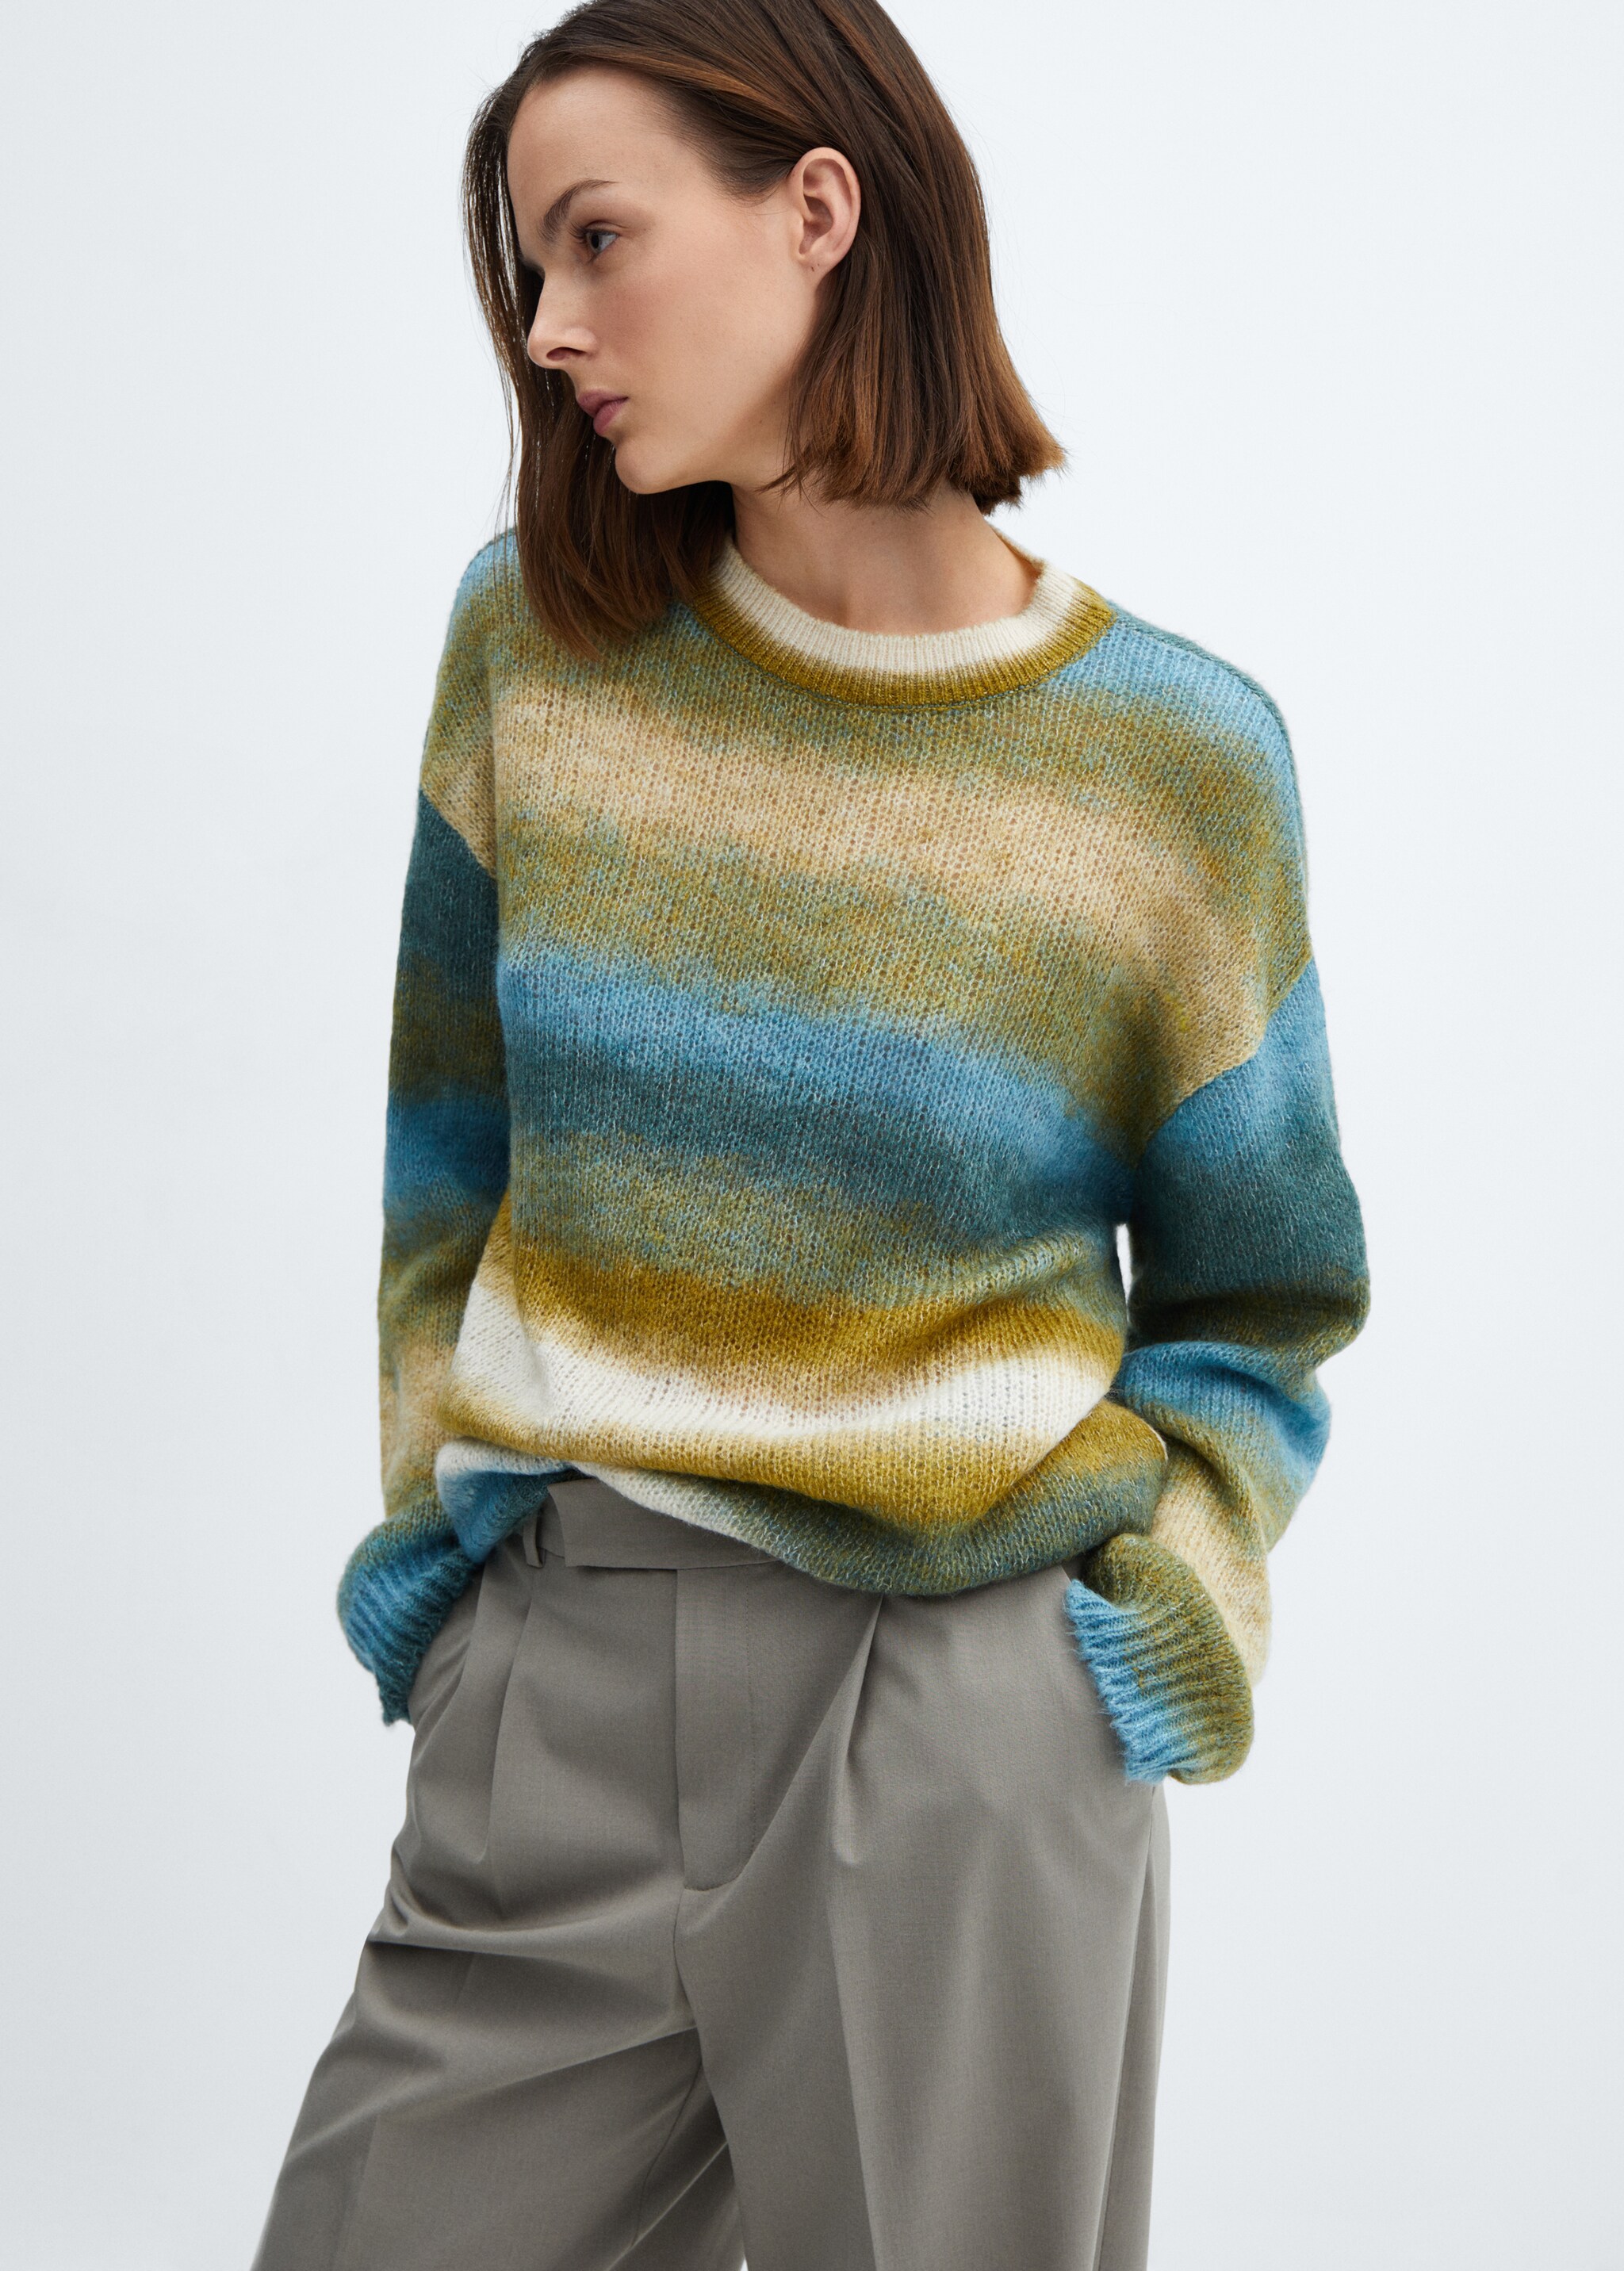 Degraded knitted sweater - Medium plane